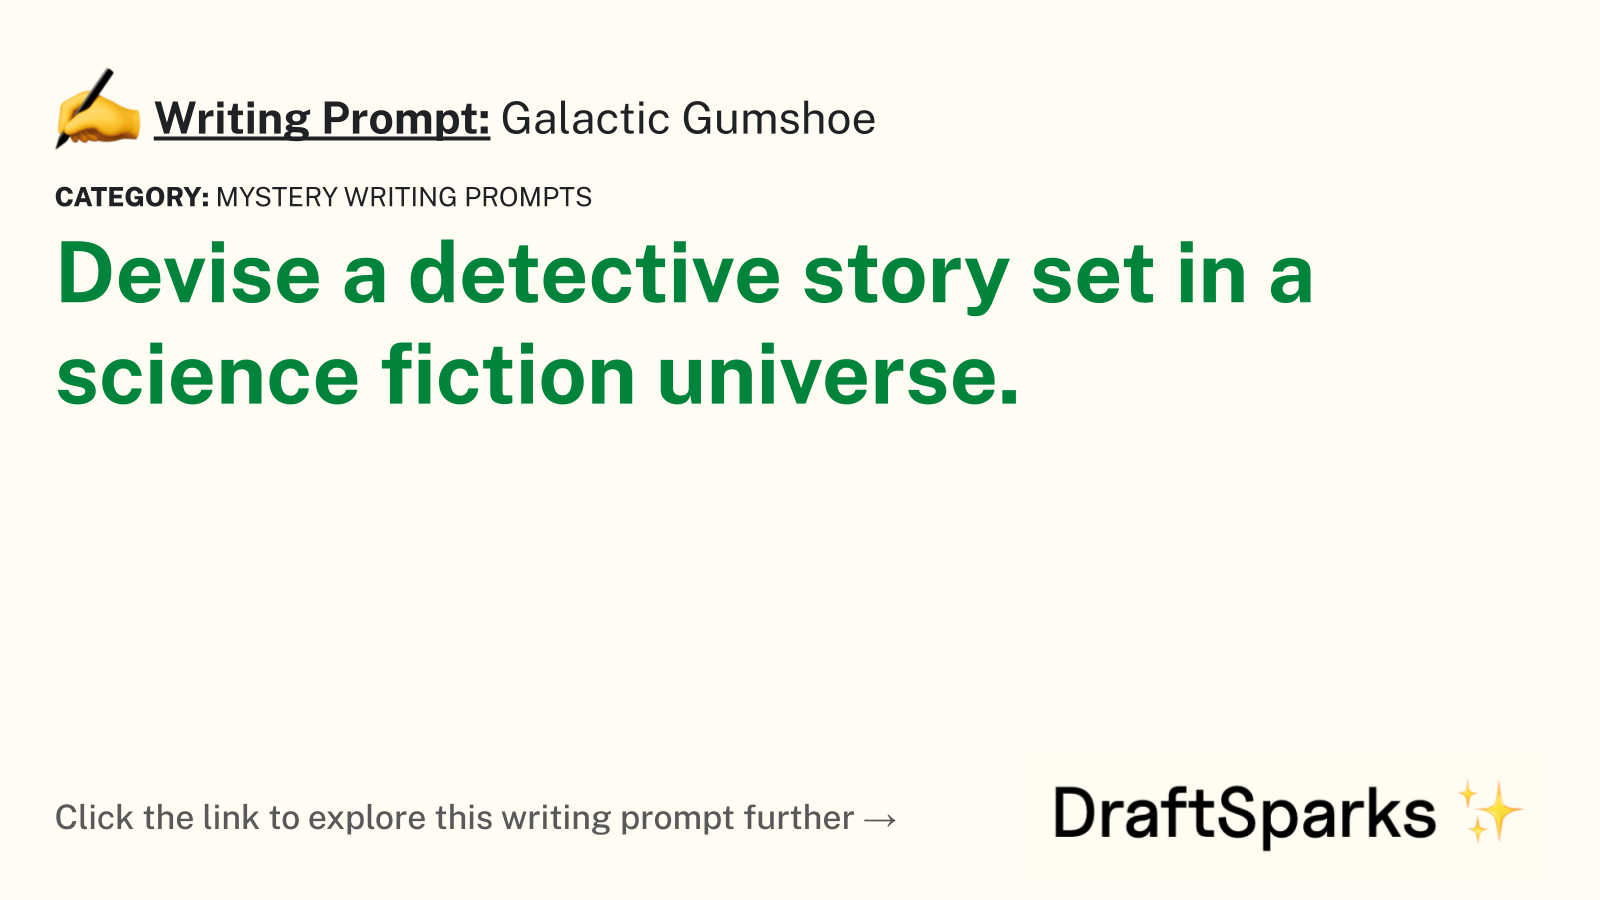 Galactic Gumshoe